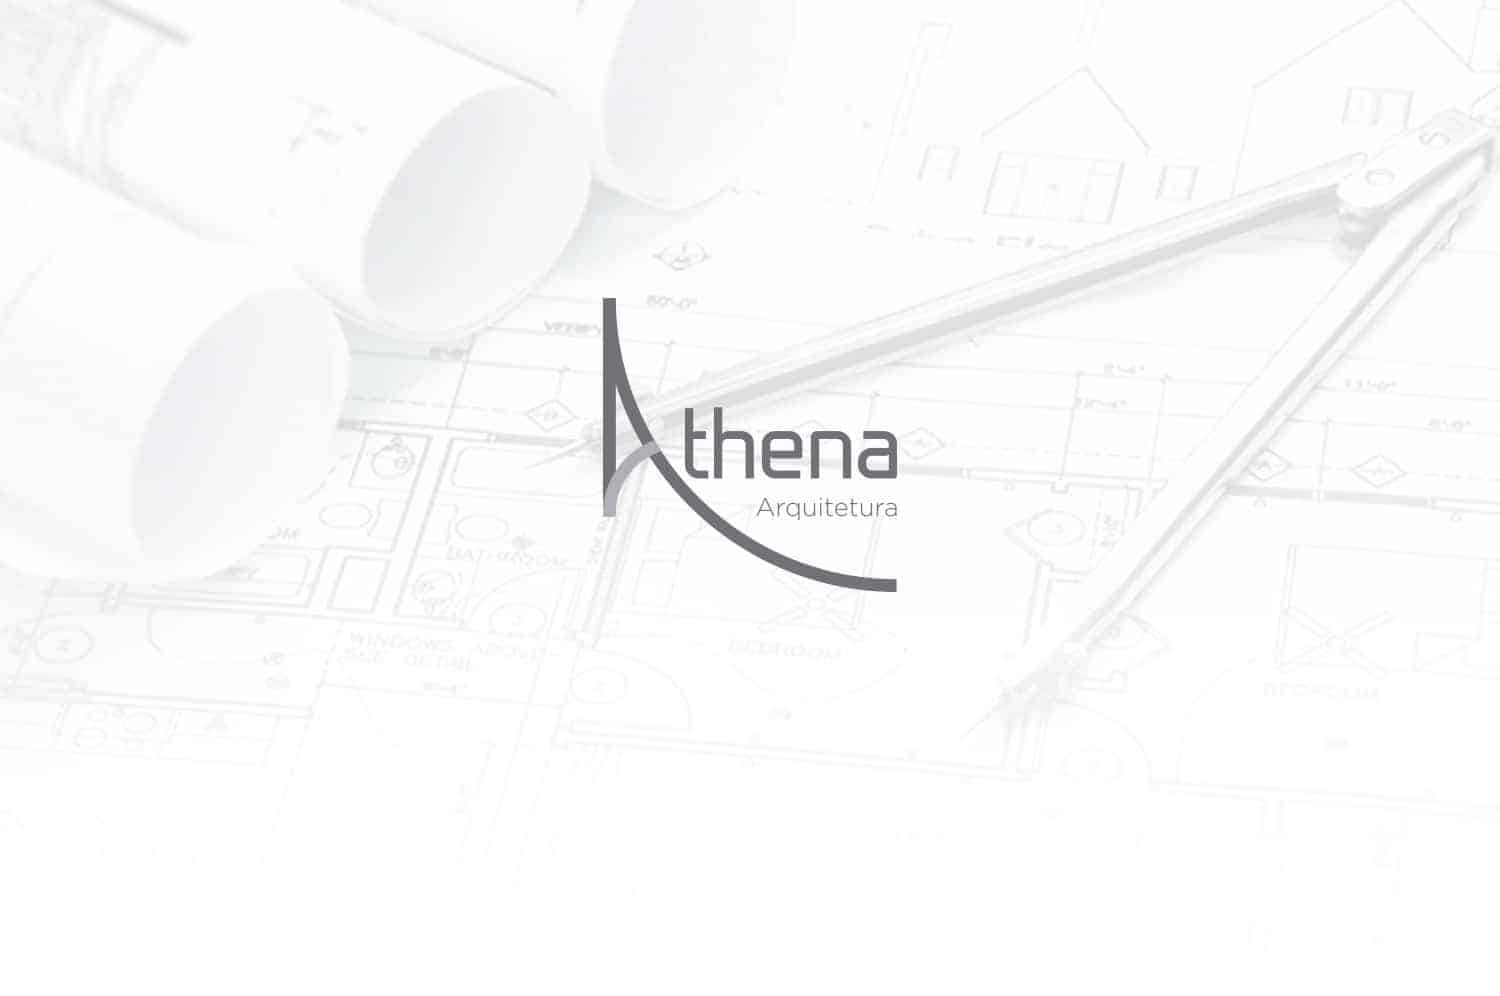 Athena Arquitetura